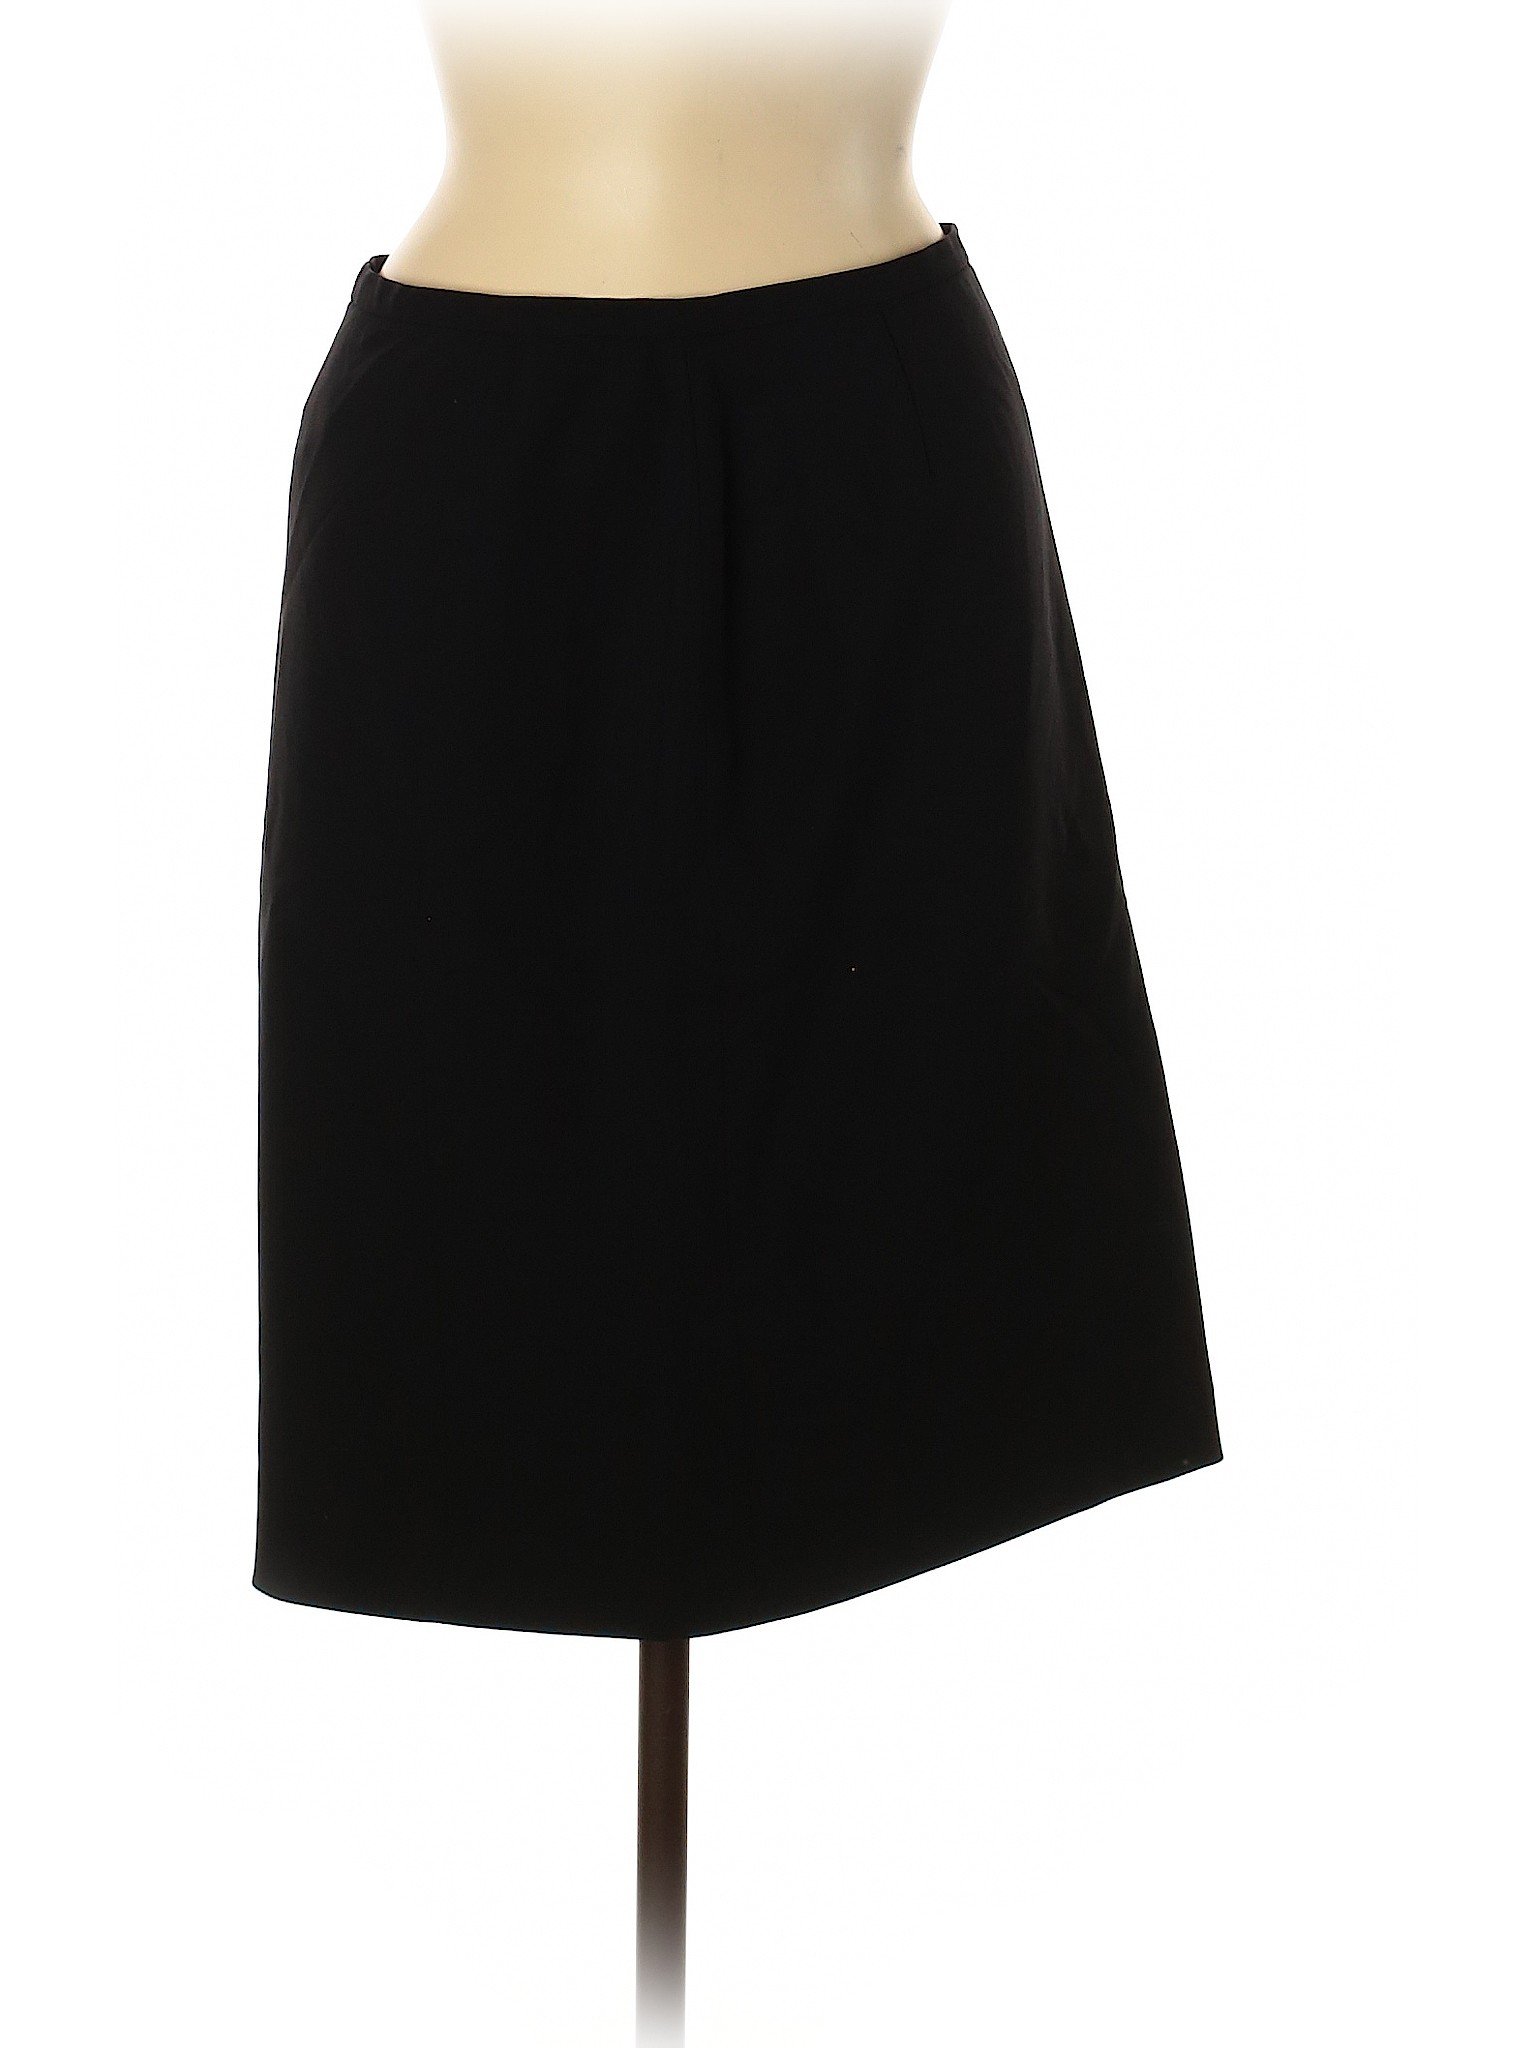 Giorgio Armani Women Black Wool Skirt 42 italian | eBay